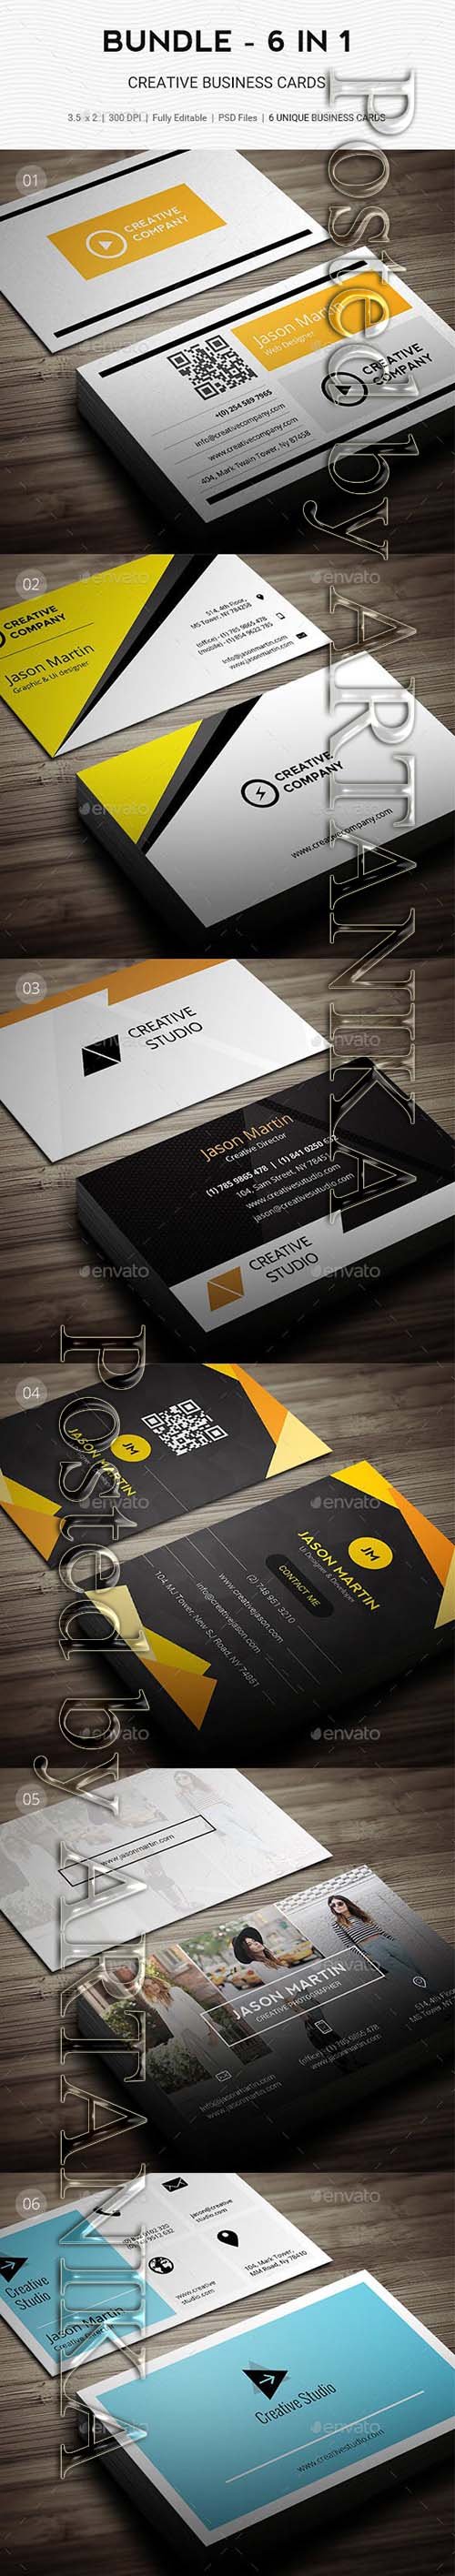 GraphicRiver - Bundle - Prime Business Cards - B53 21165807